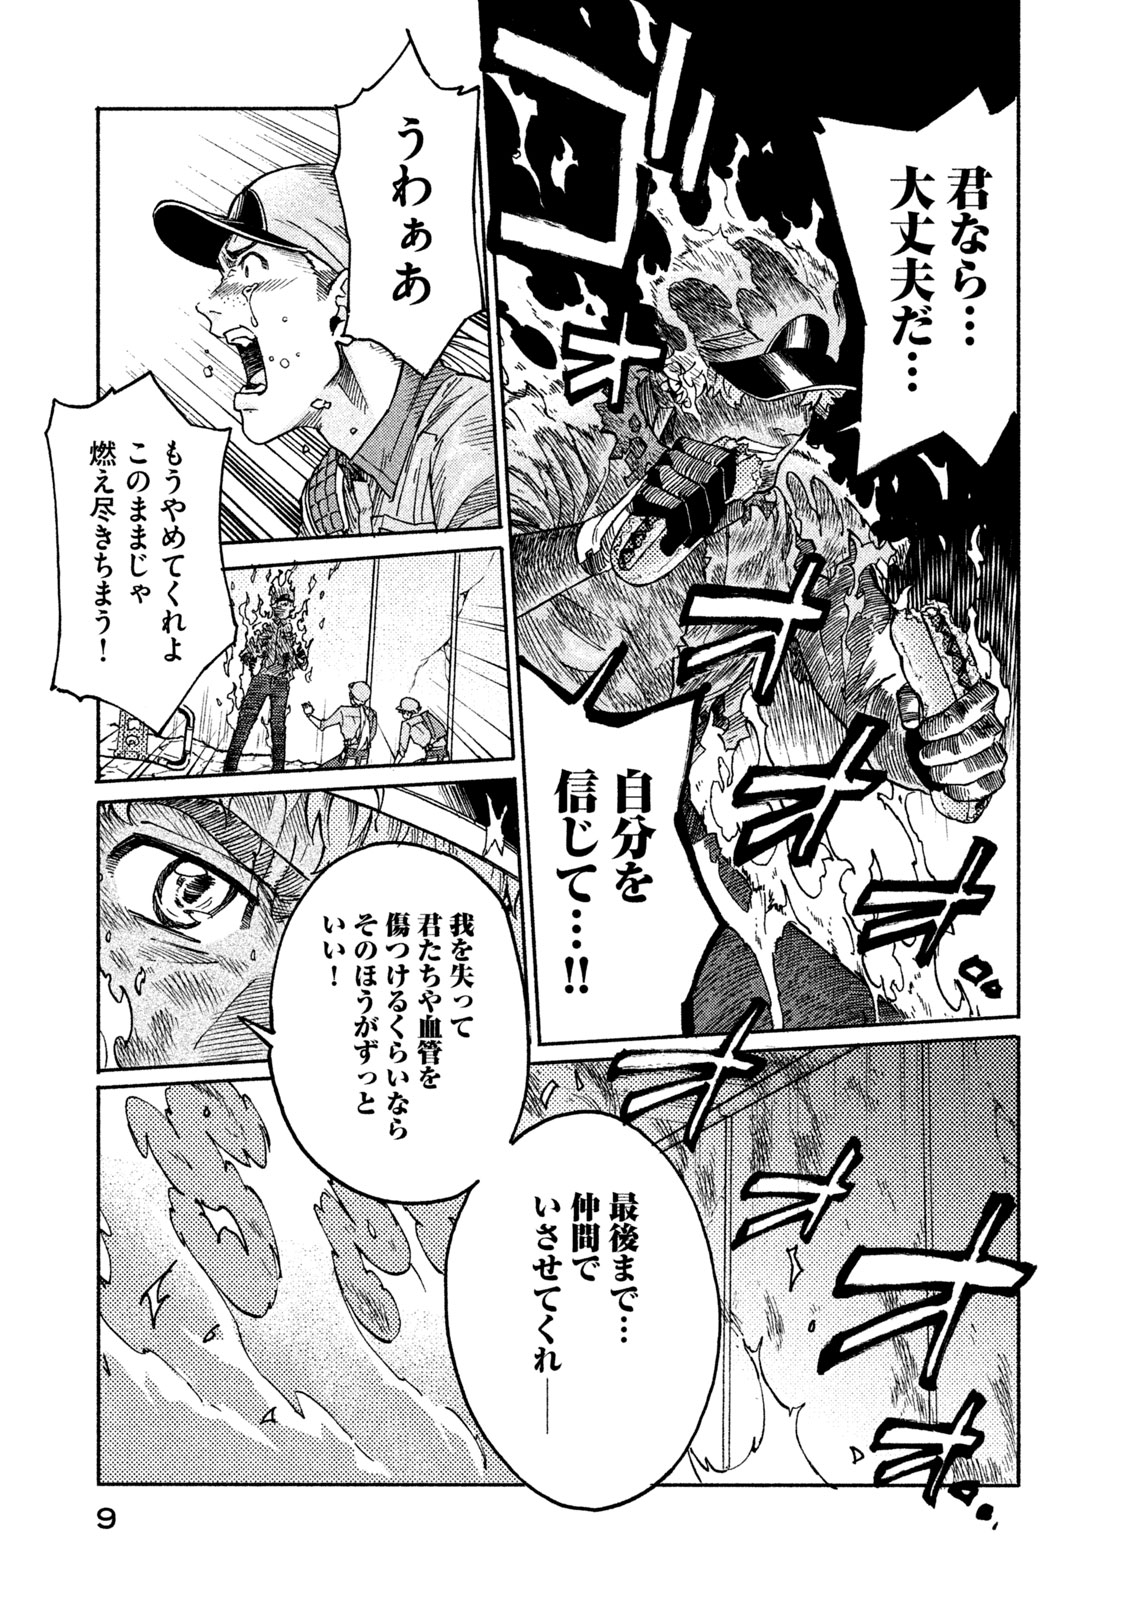 Hataraku Saibou BLACK - Chapter 25 - Page 11